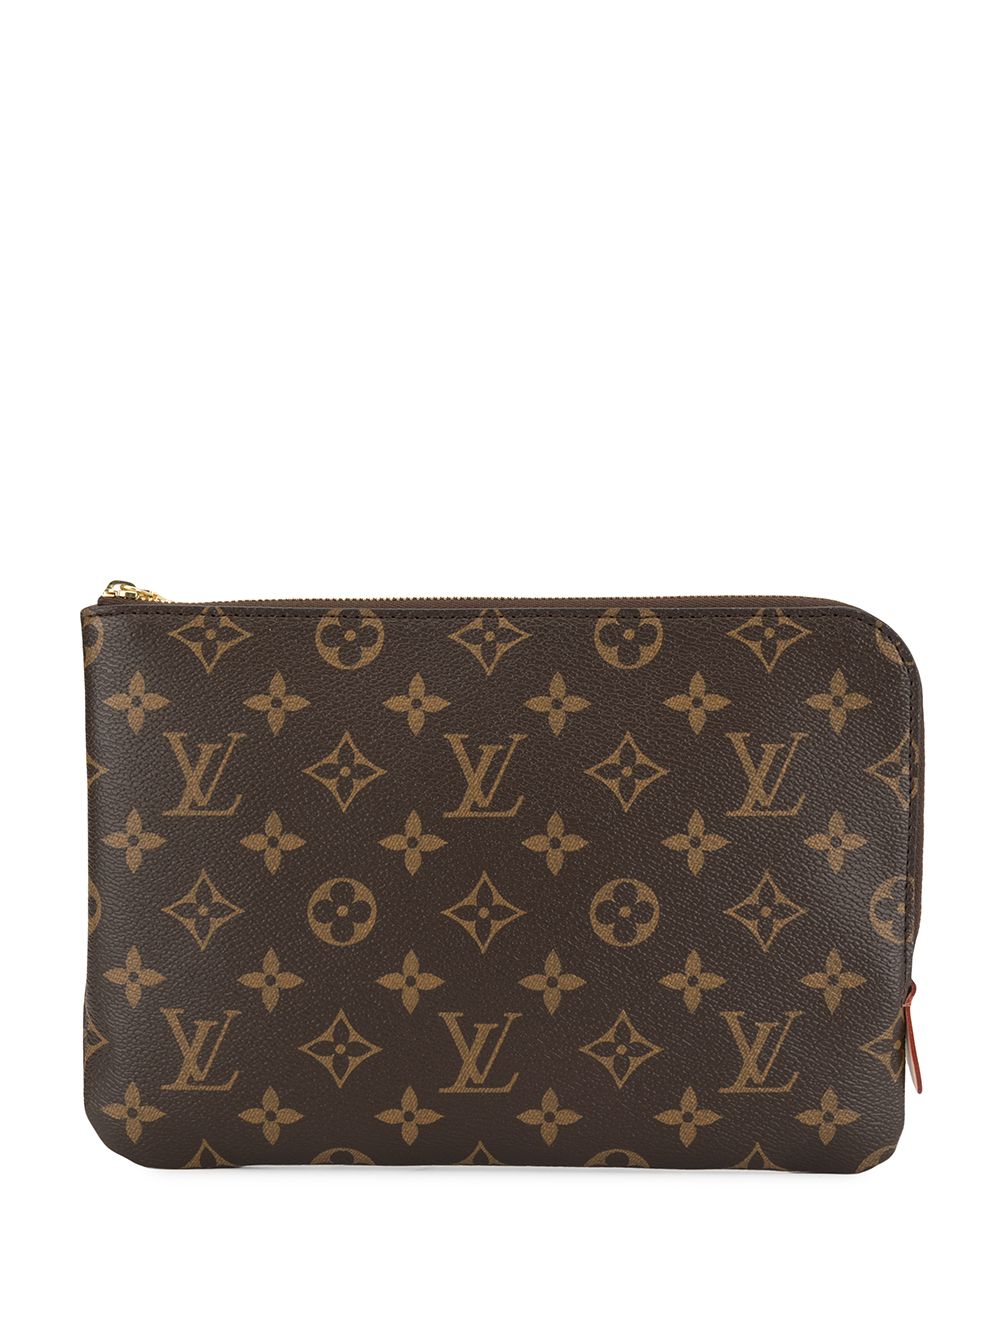 Louis Vuitton Monogram Voyage - Brown Clutches, Handbags